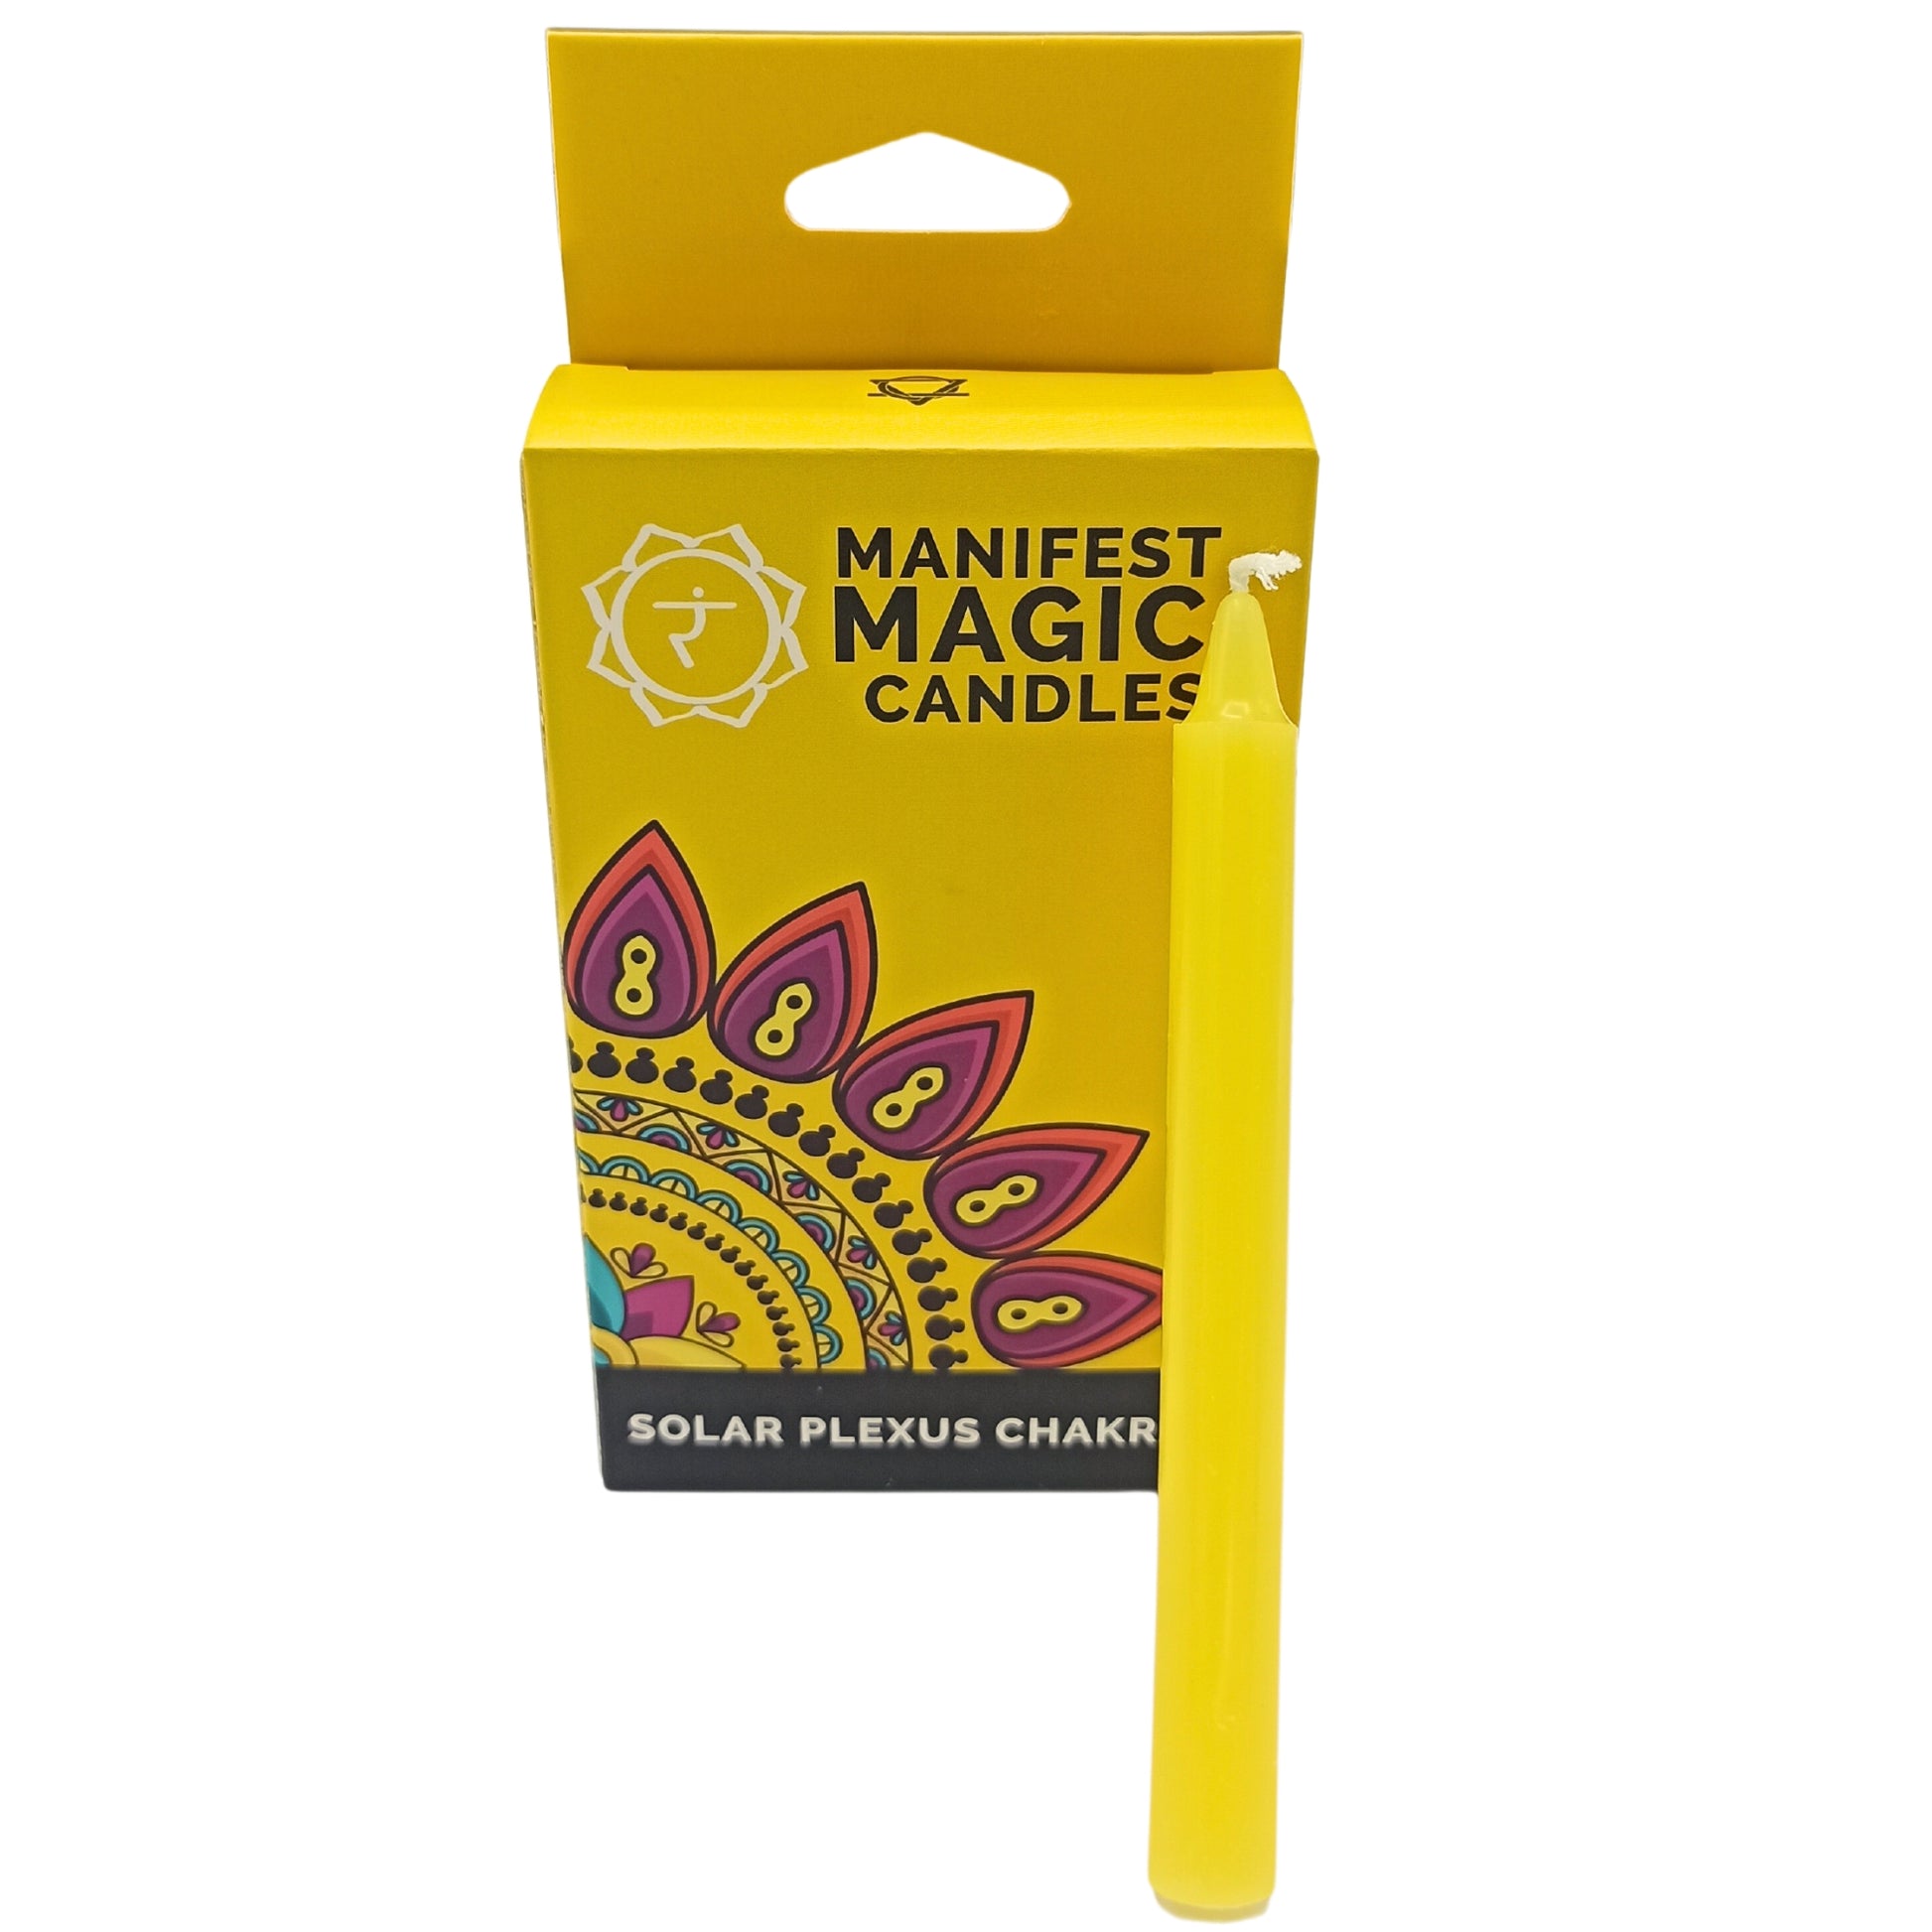 Manifest Magic Candles (pack of 12) - Yellow - Solar Plexus Chakra